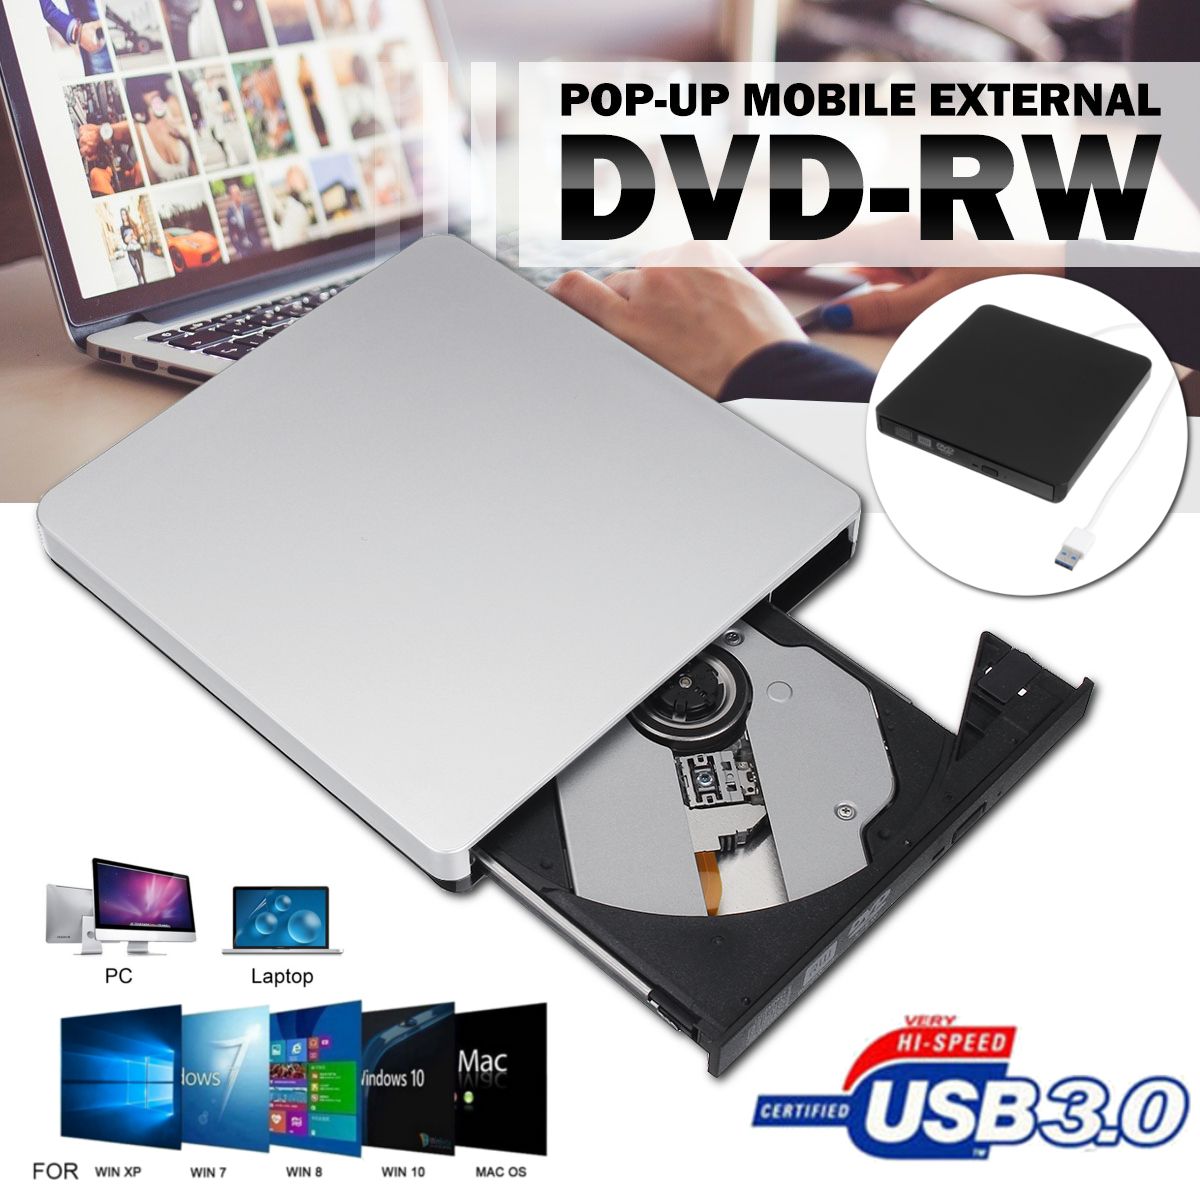 USB-30-Optical-Drive-Slim-External-DVD-Drive-DVD-RW-CD-RW-Combo-Drive-Burner-Reader-Player-1611767